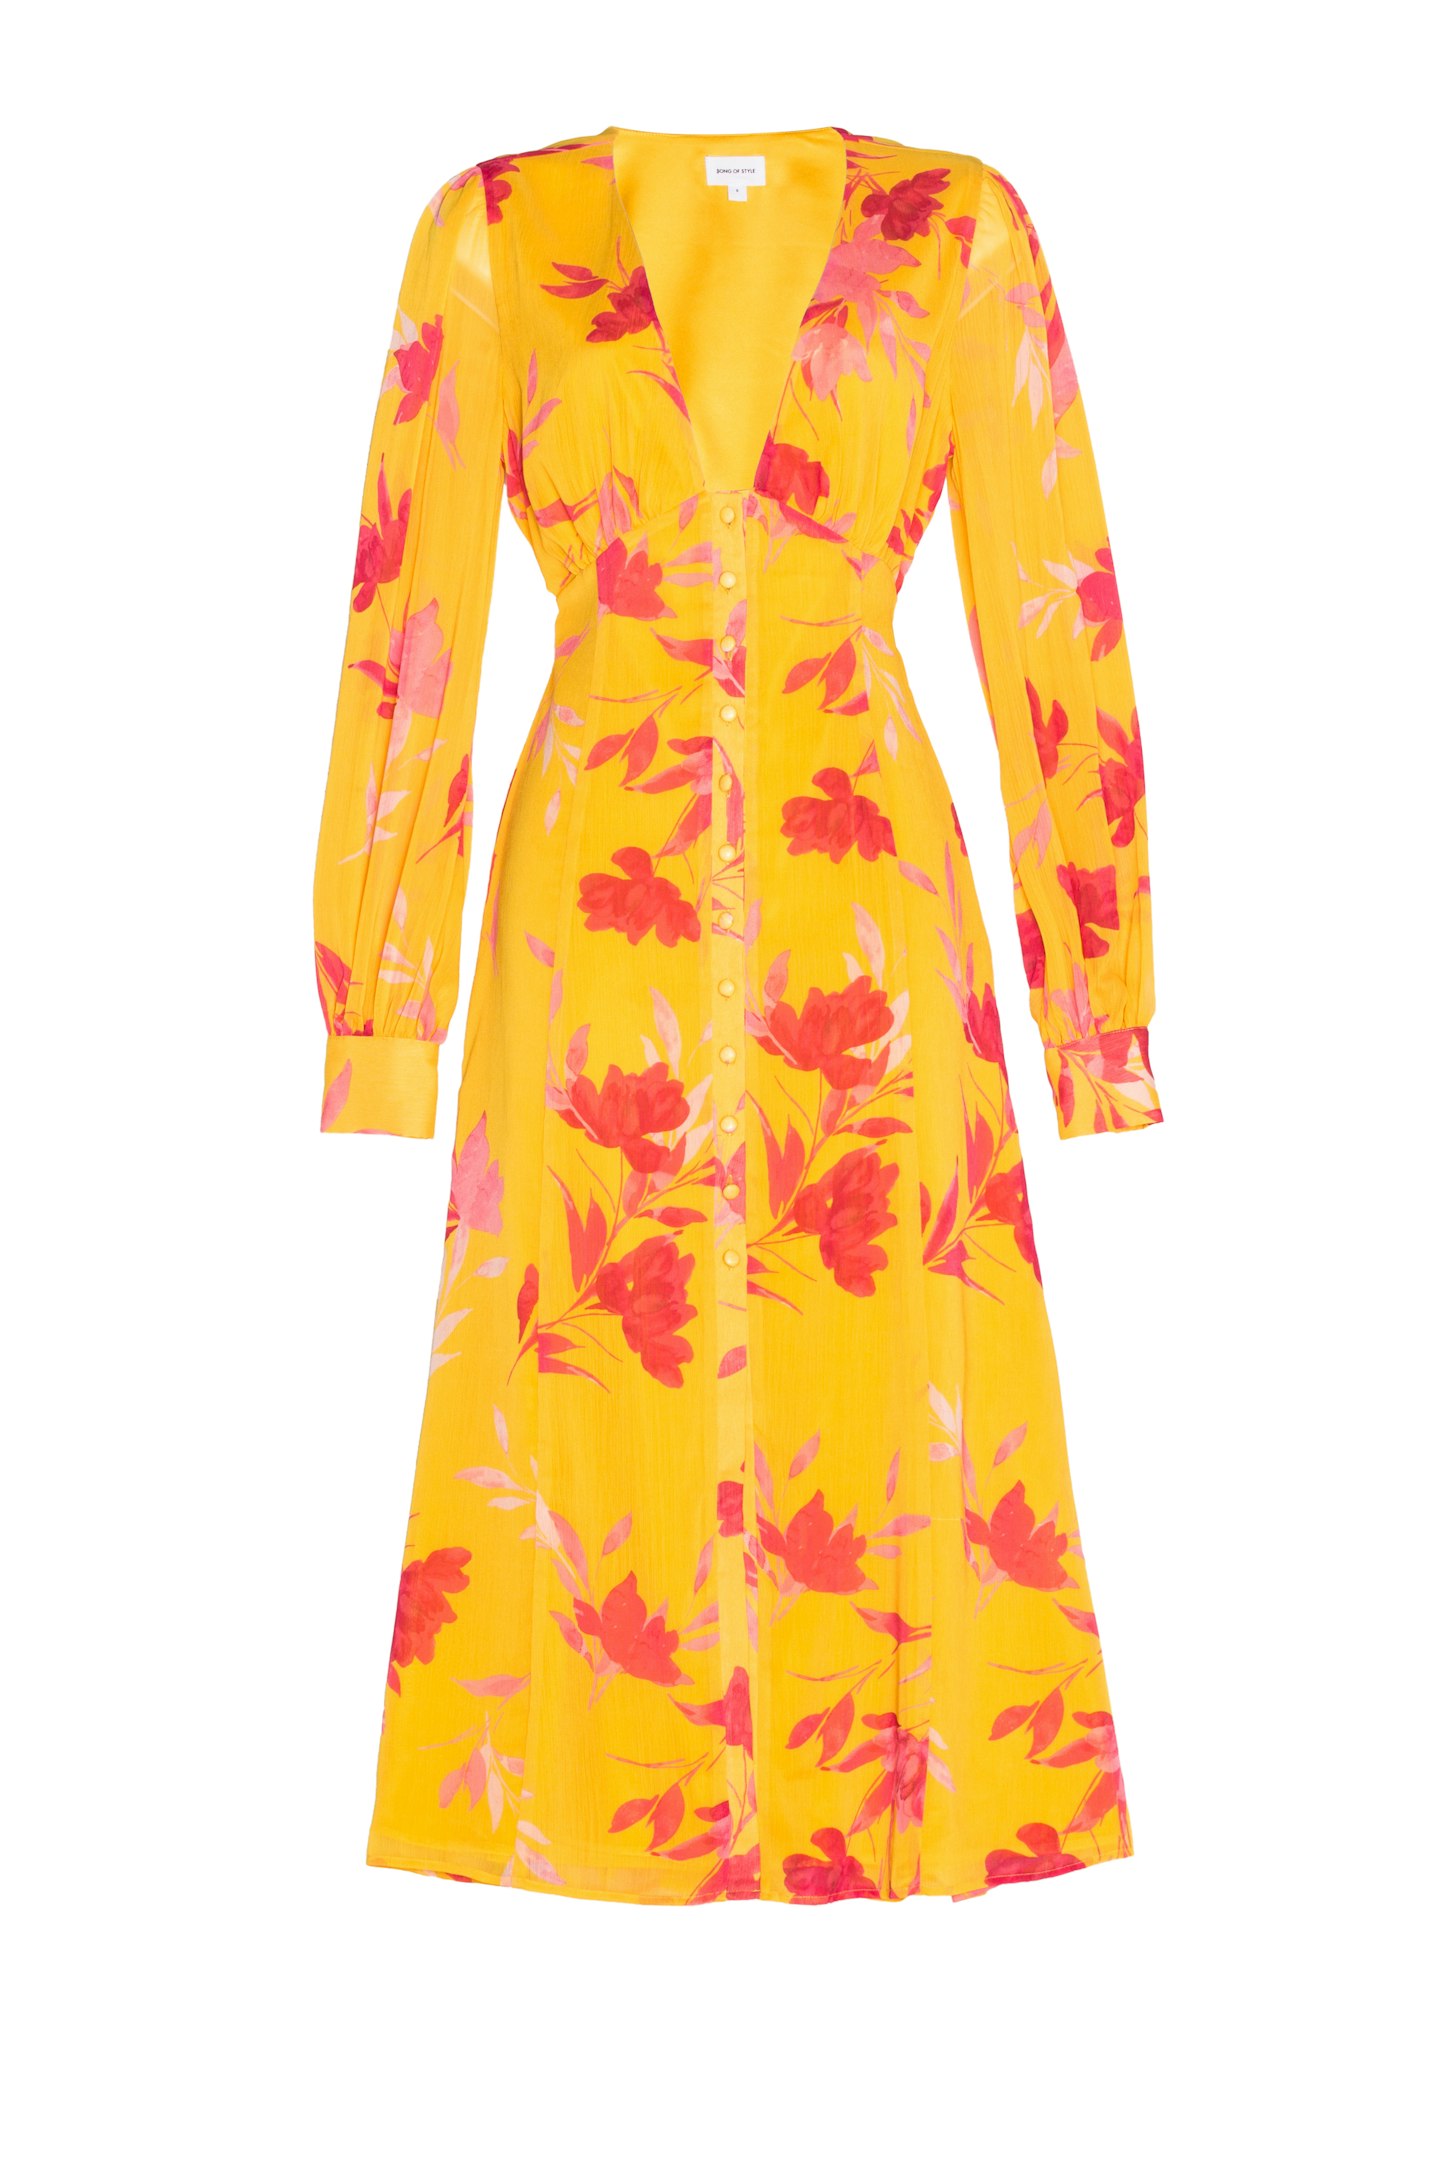 Yellow Floral Button-Down Dress, £215